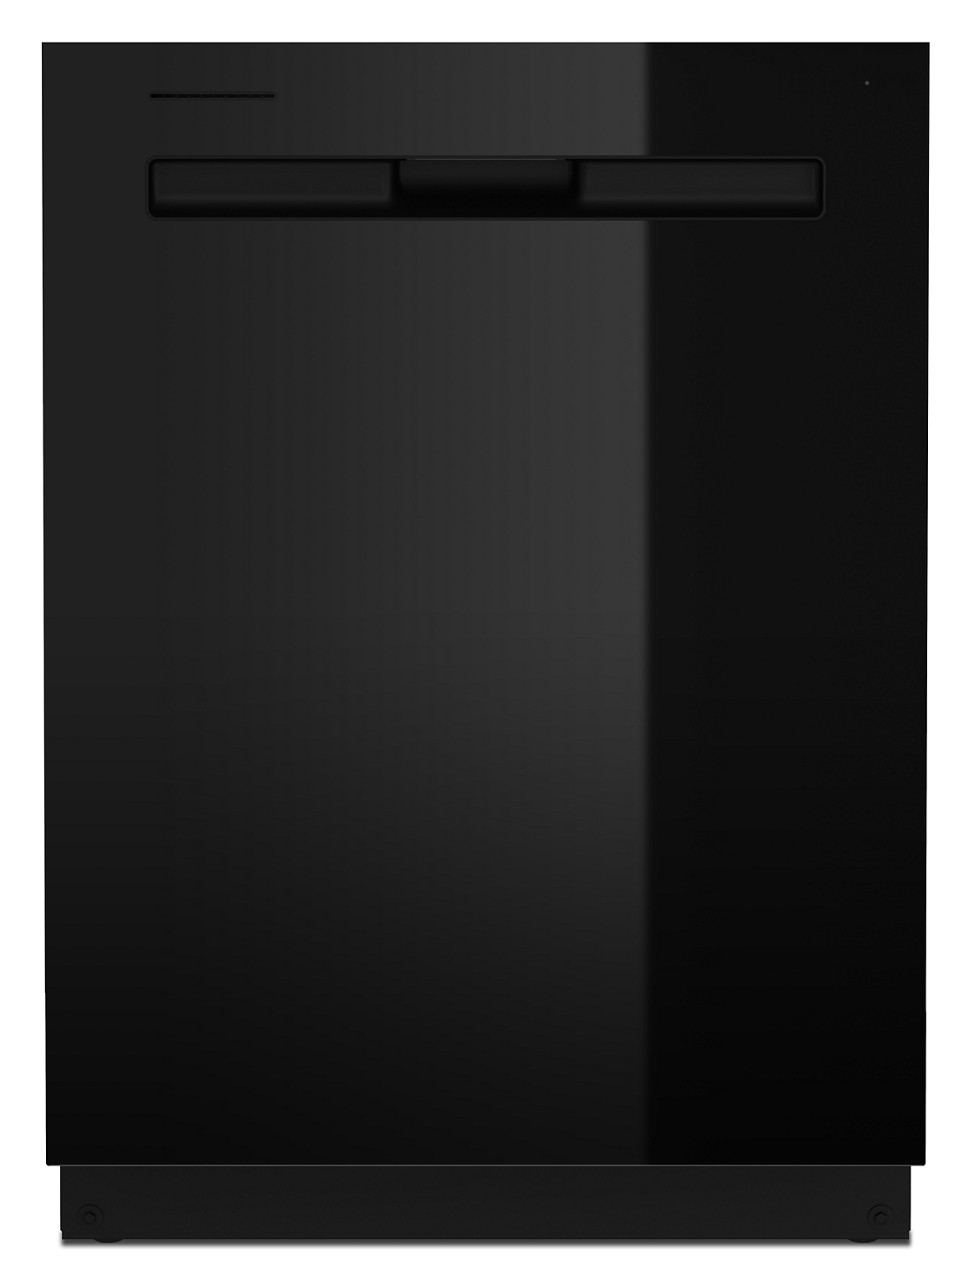 Maytag® 24" Black Built in Dishwasher